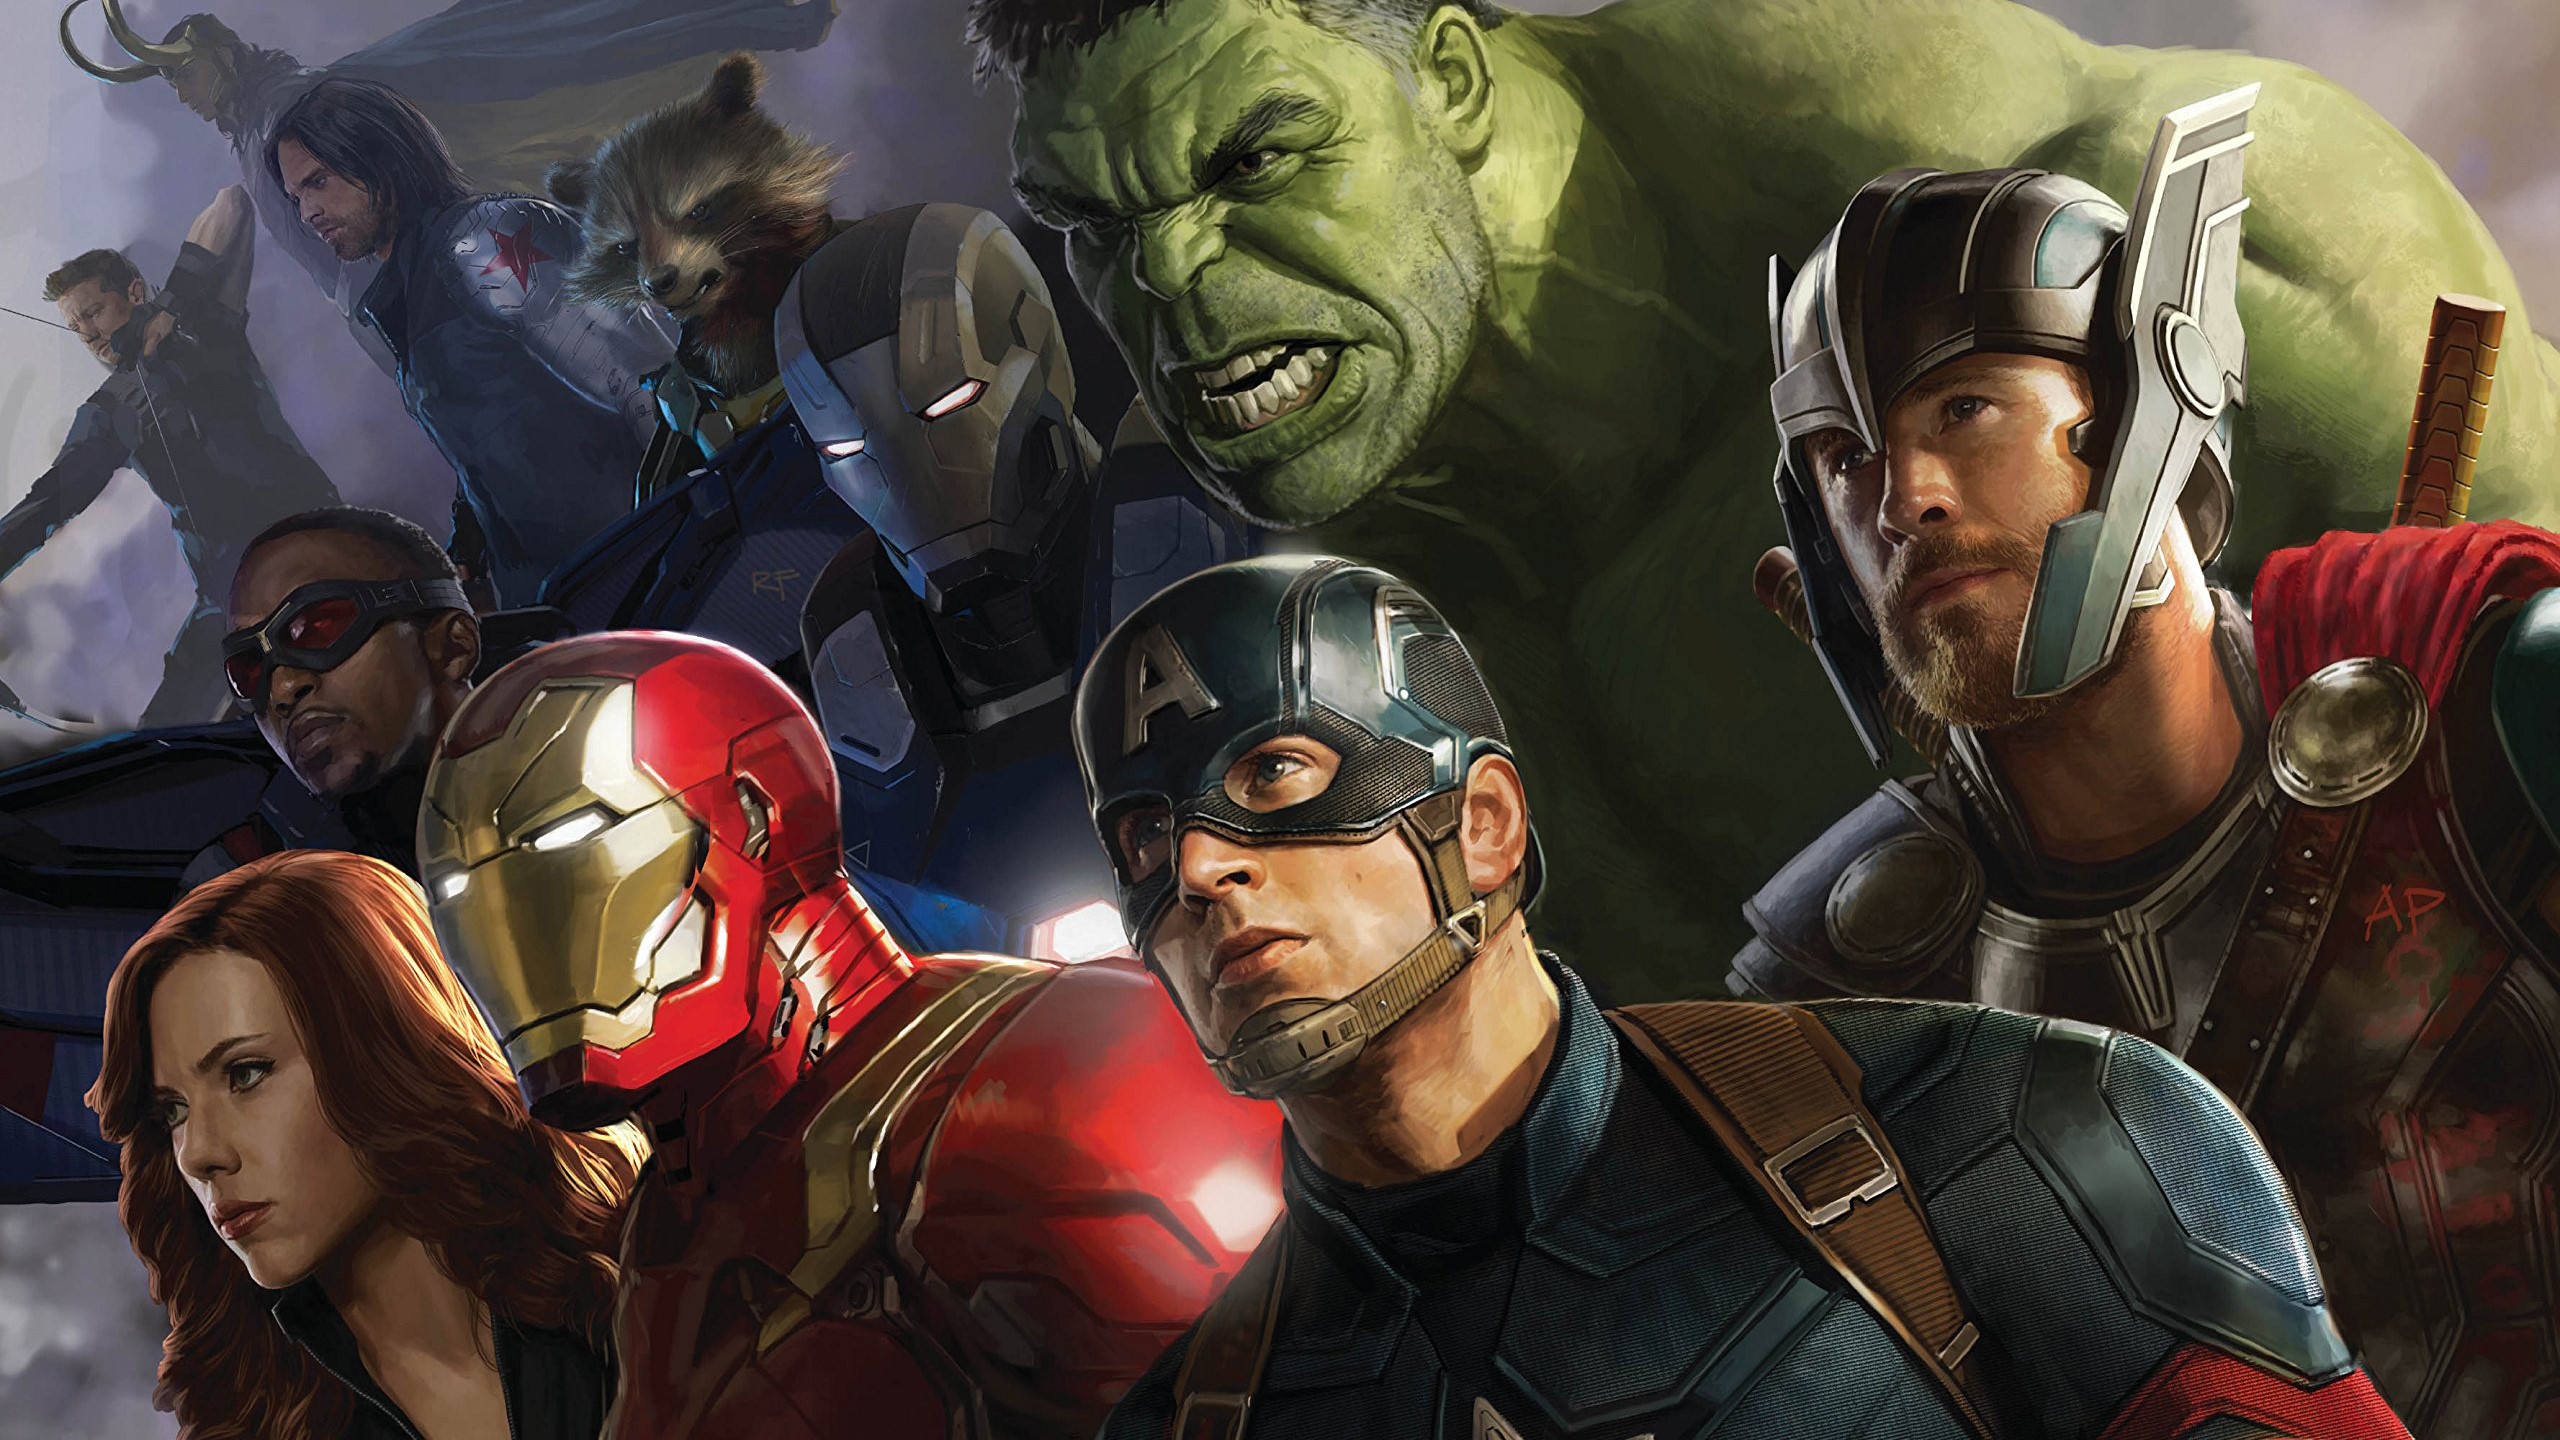 Wallpaper / artwork, The Avengers, Marvel Comics, Marvel Cinematic Universe, comics, superhero, Hulk, Iron Man, Thor, Captain America, Rocket Raccoon, Loki, War Machine, Black Widow, Falcon, Hawkeye